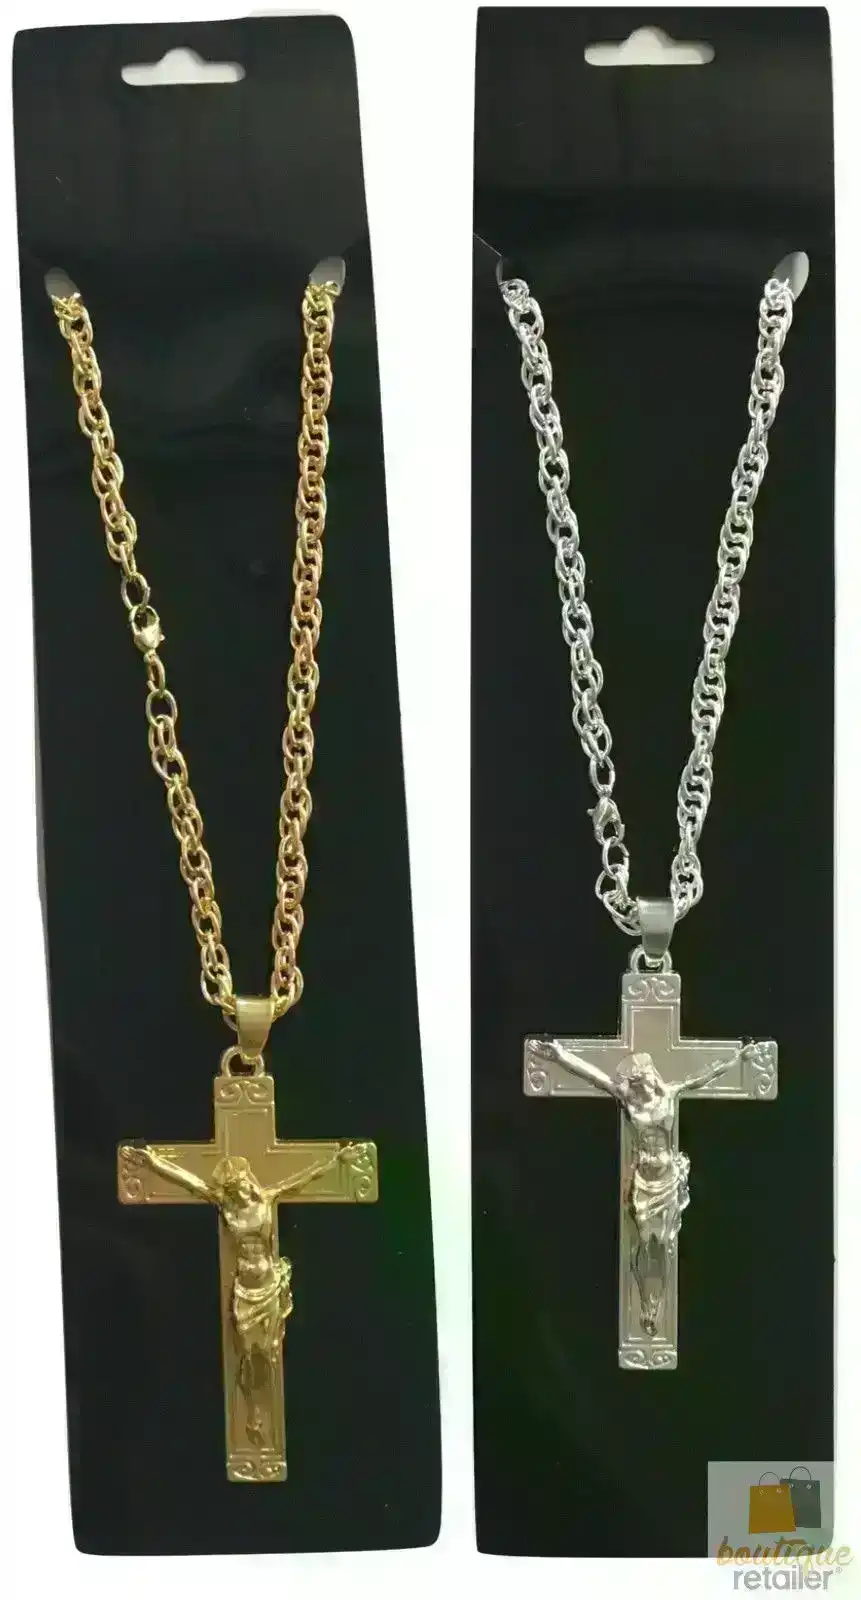 Jesus Christ Metal Necklace Chain Pendant Chain Jewellery Crucifix